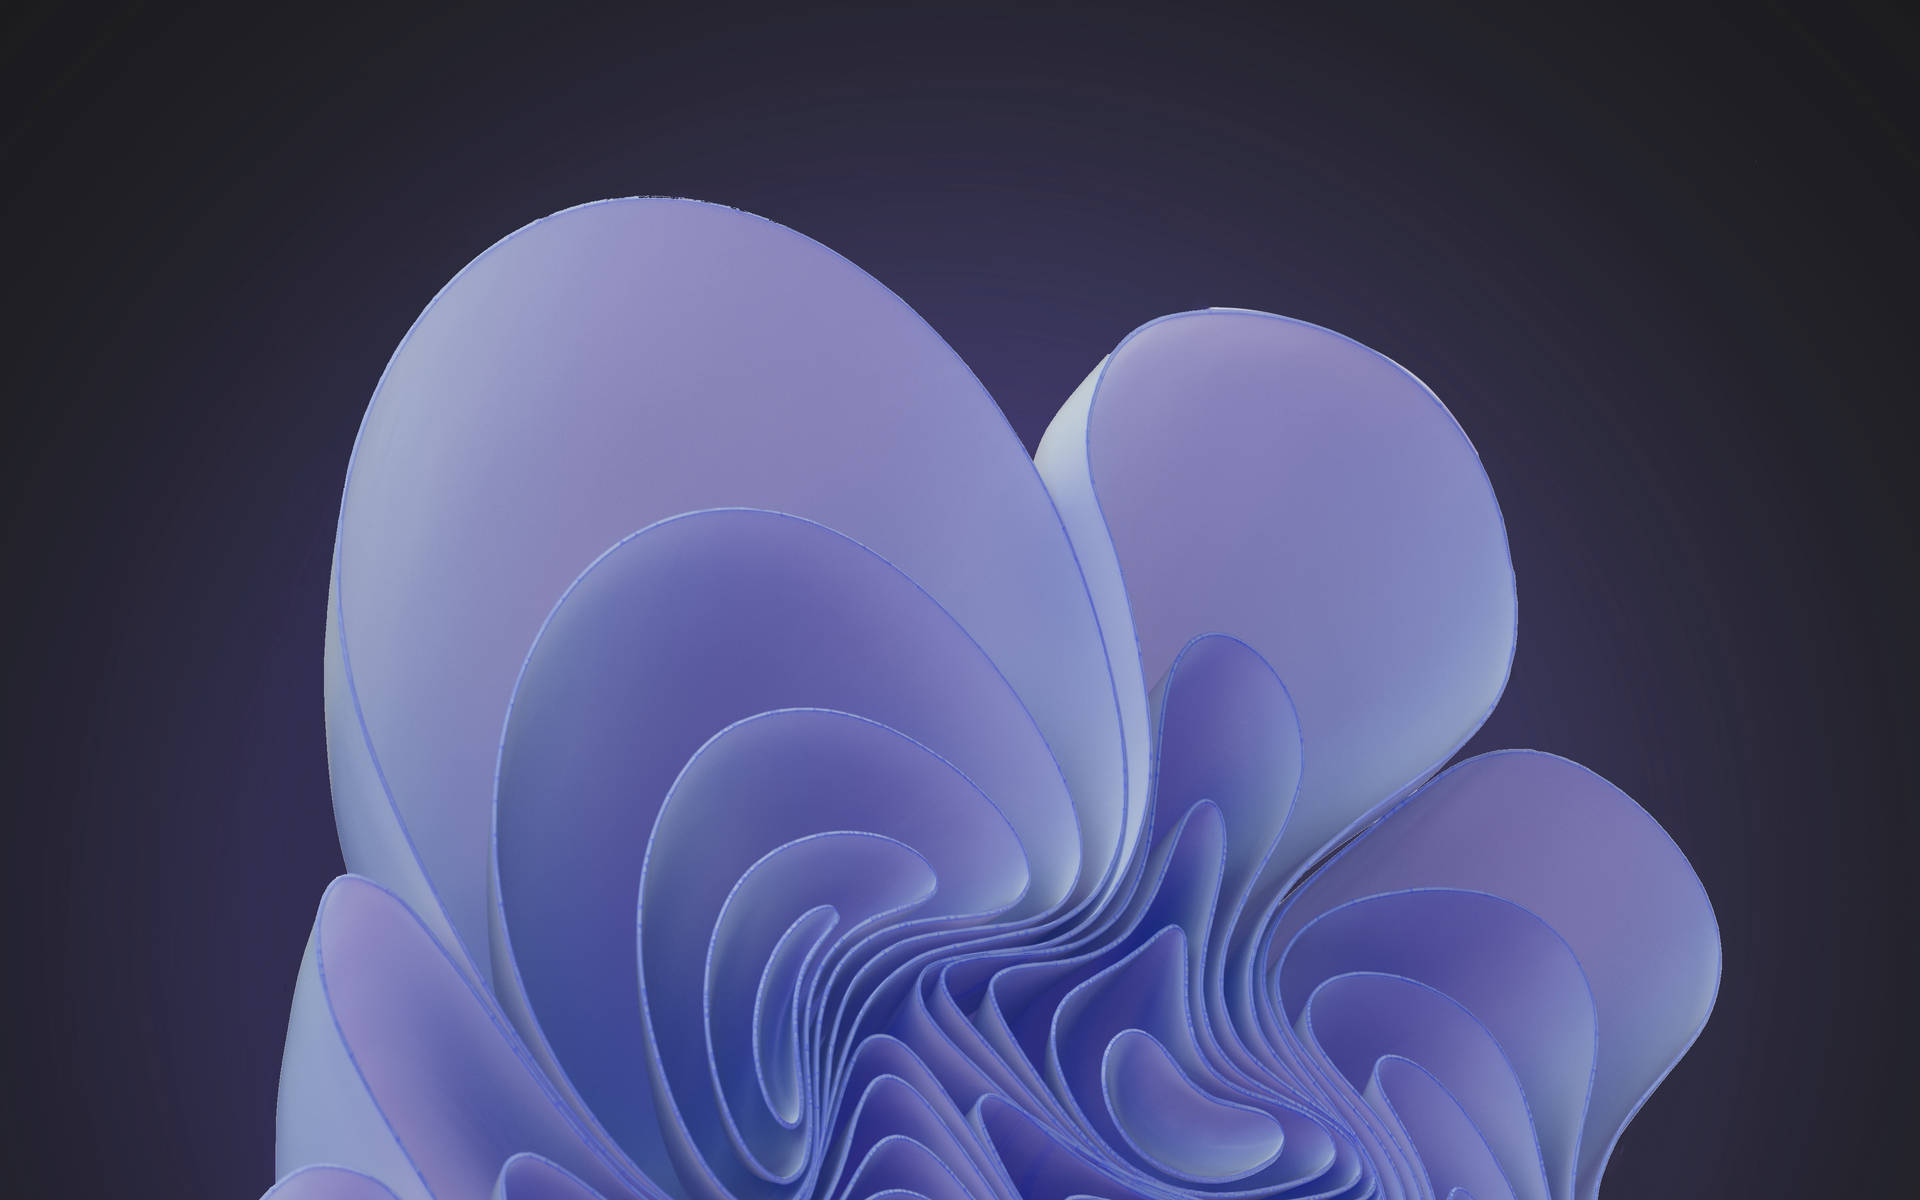 Waves Wallpaper 4K, Purple, Windows 11, Dark Mode